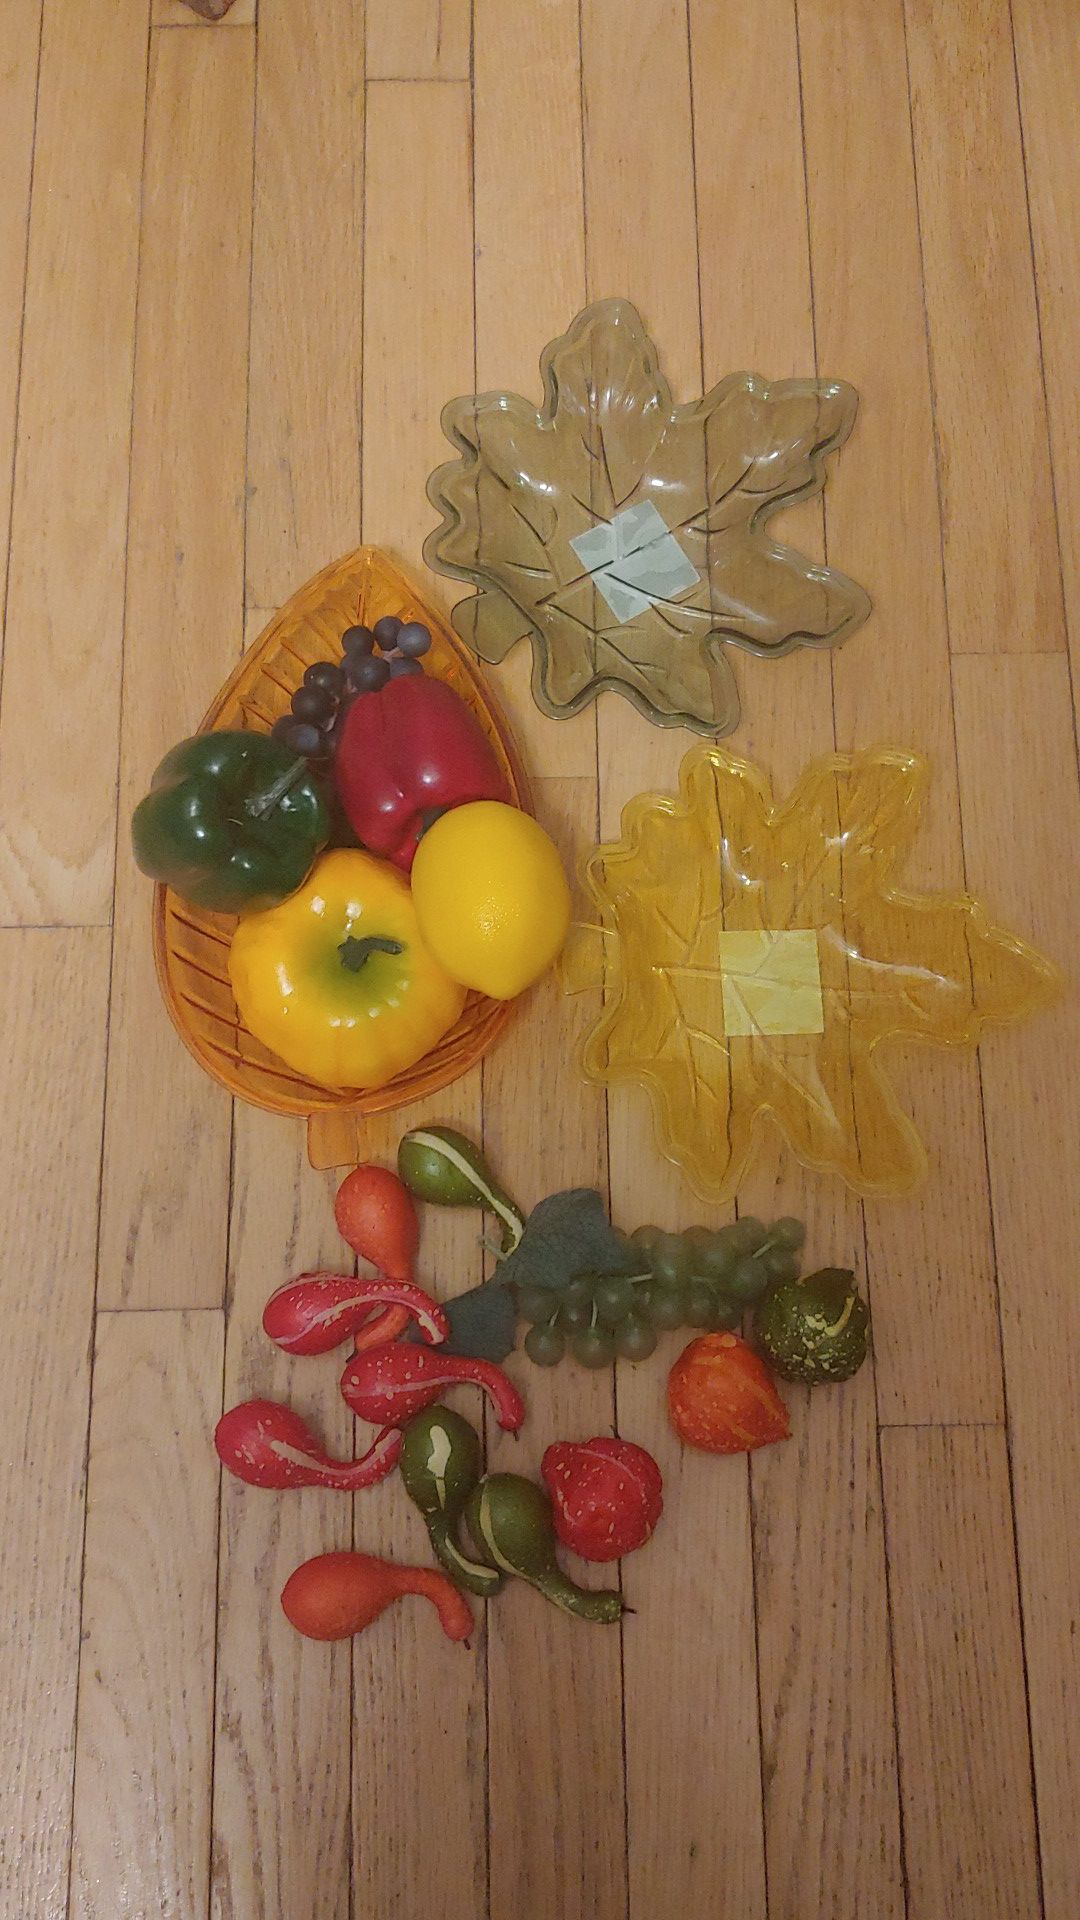 Decorative fruit, veggies and dishes